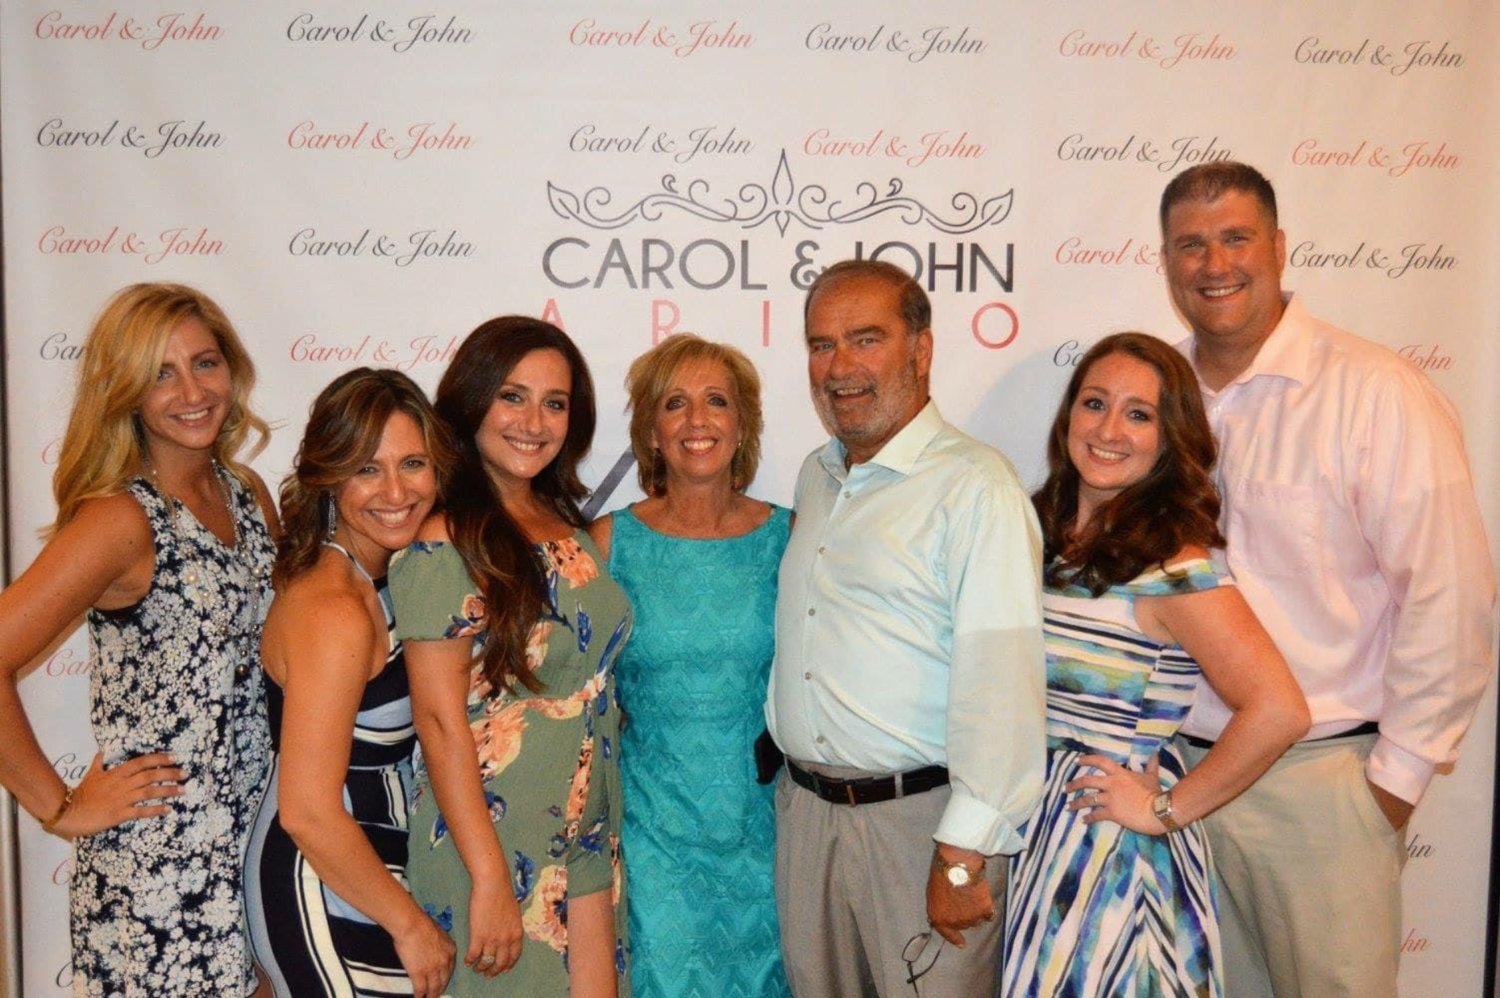 John arigo and his wife Carol, had five children. From left, in 2017, were Cheryl, Lauren, Stefanie, Melanie and Peter.